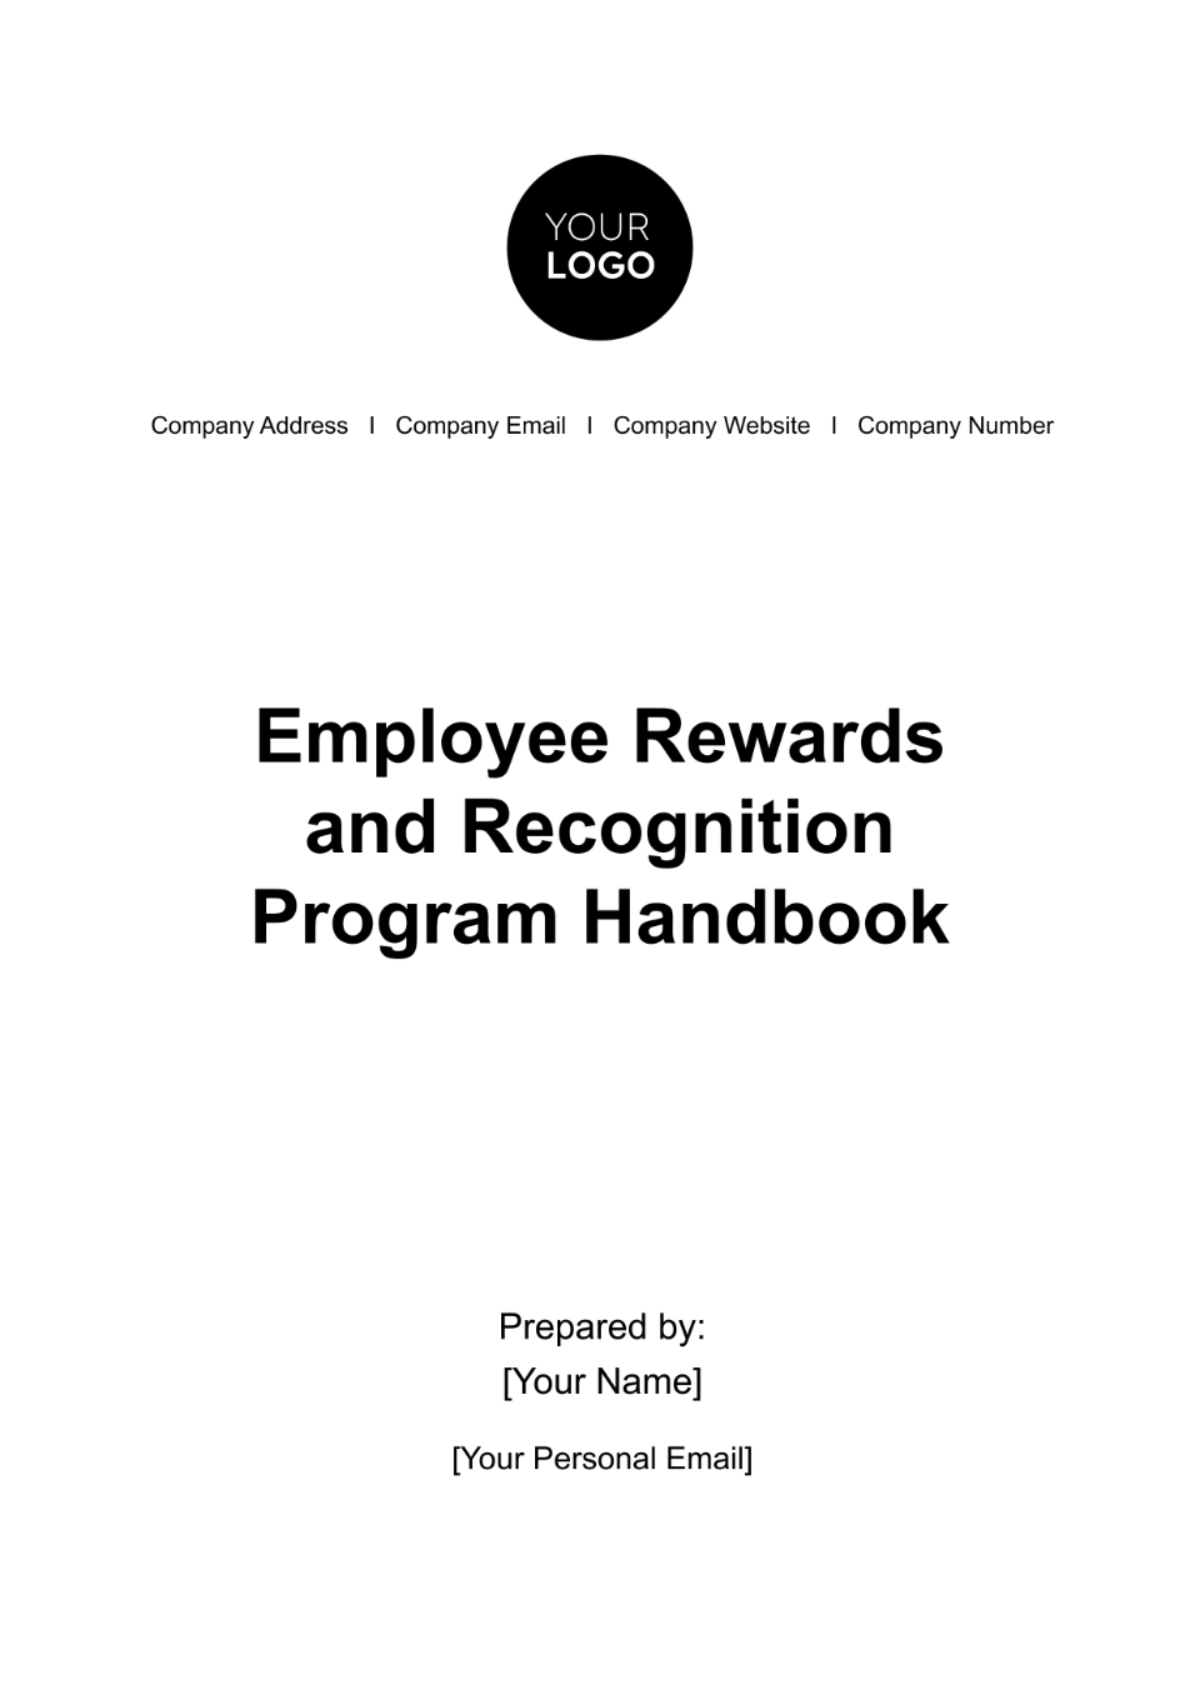 Free Employee Rewards and Recognition Program Handbook HR Template